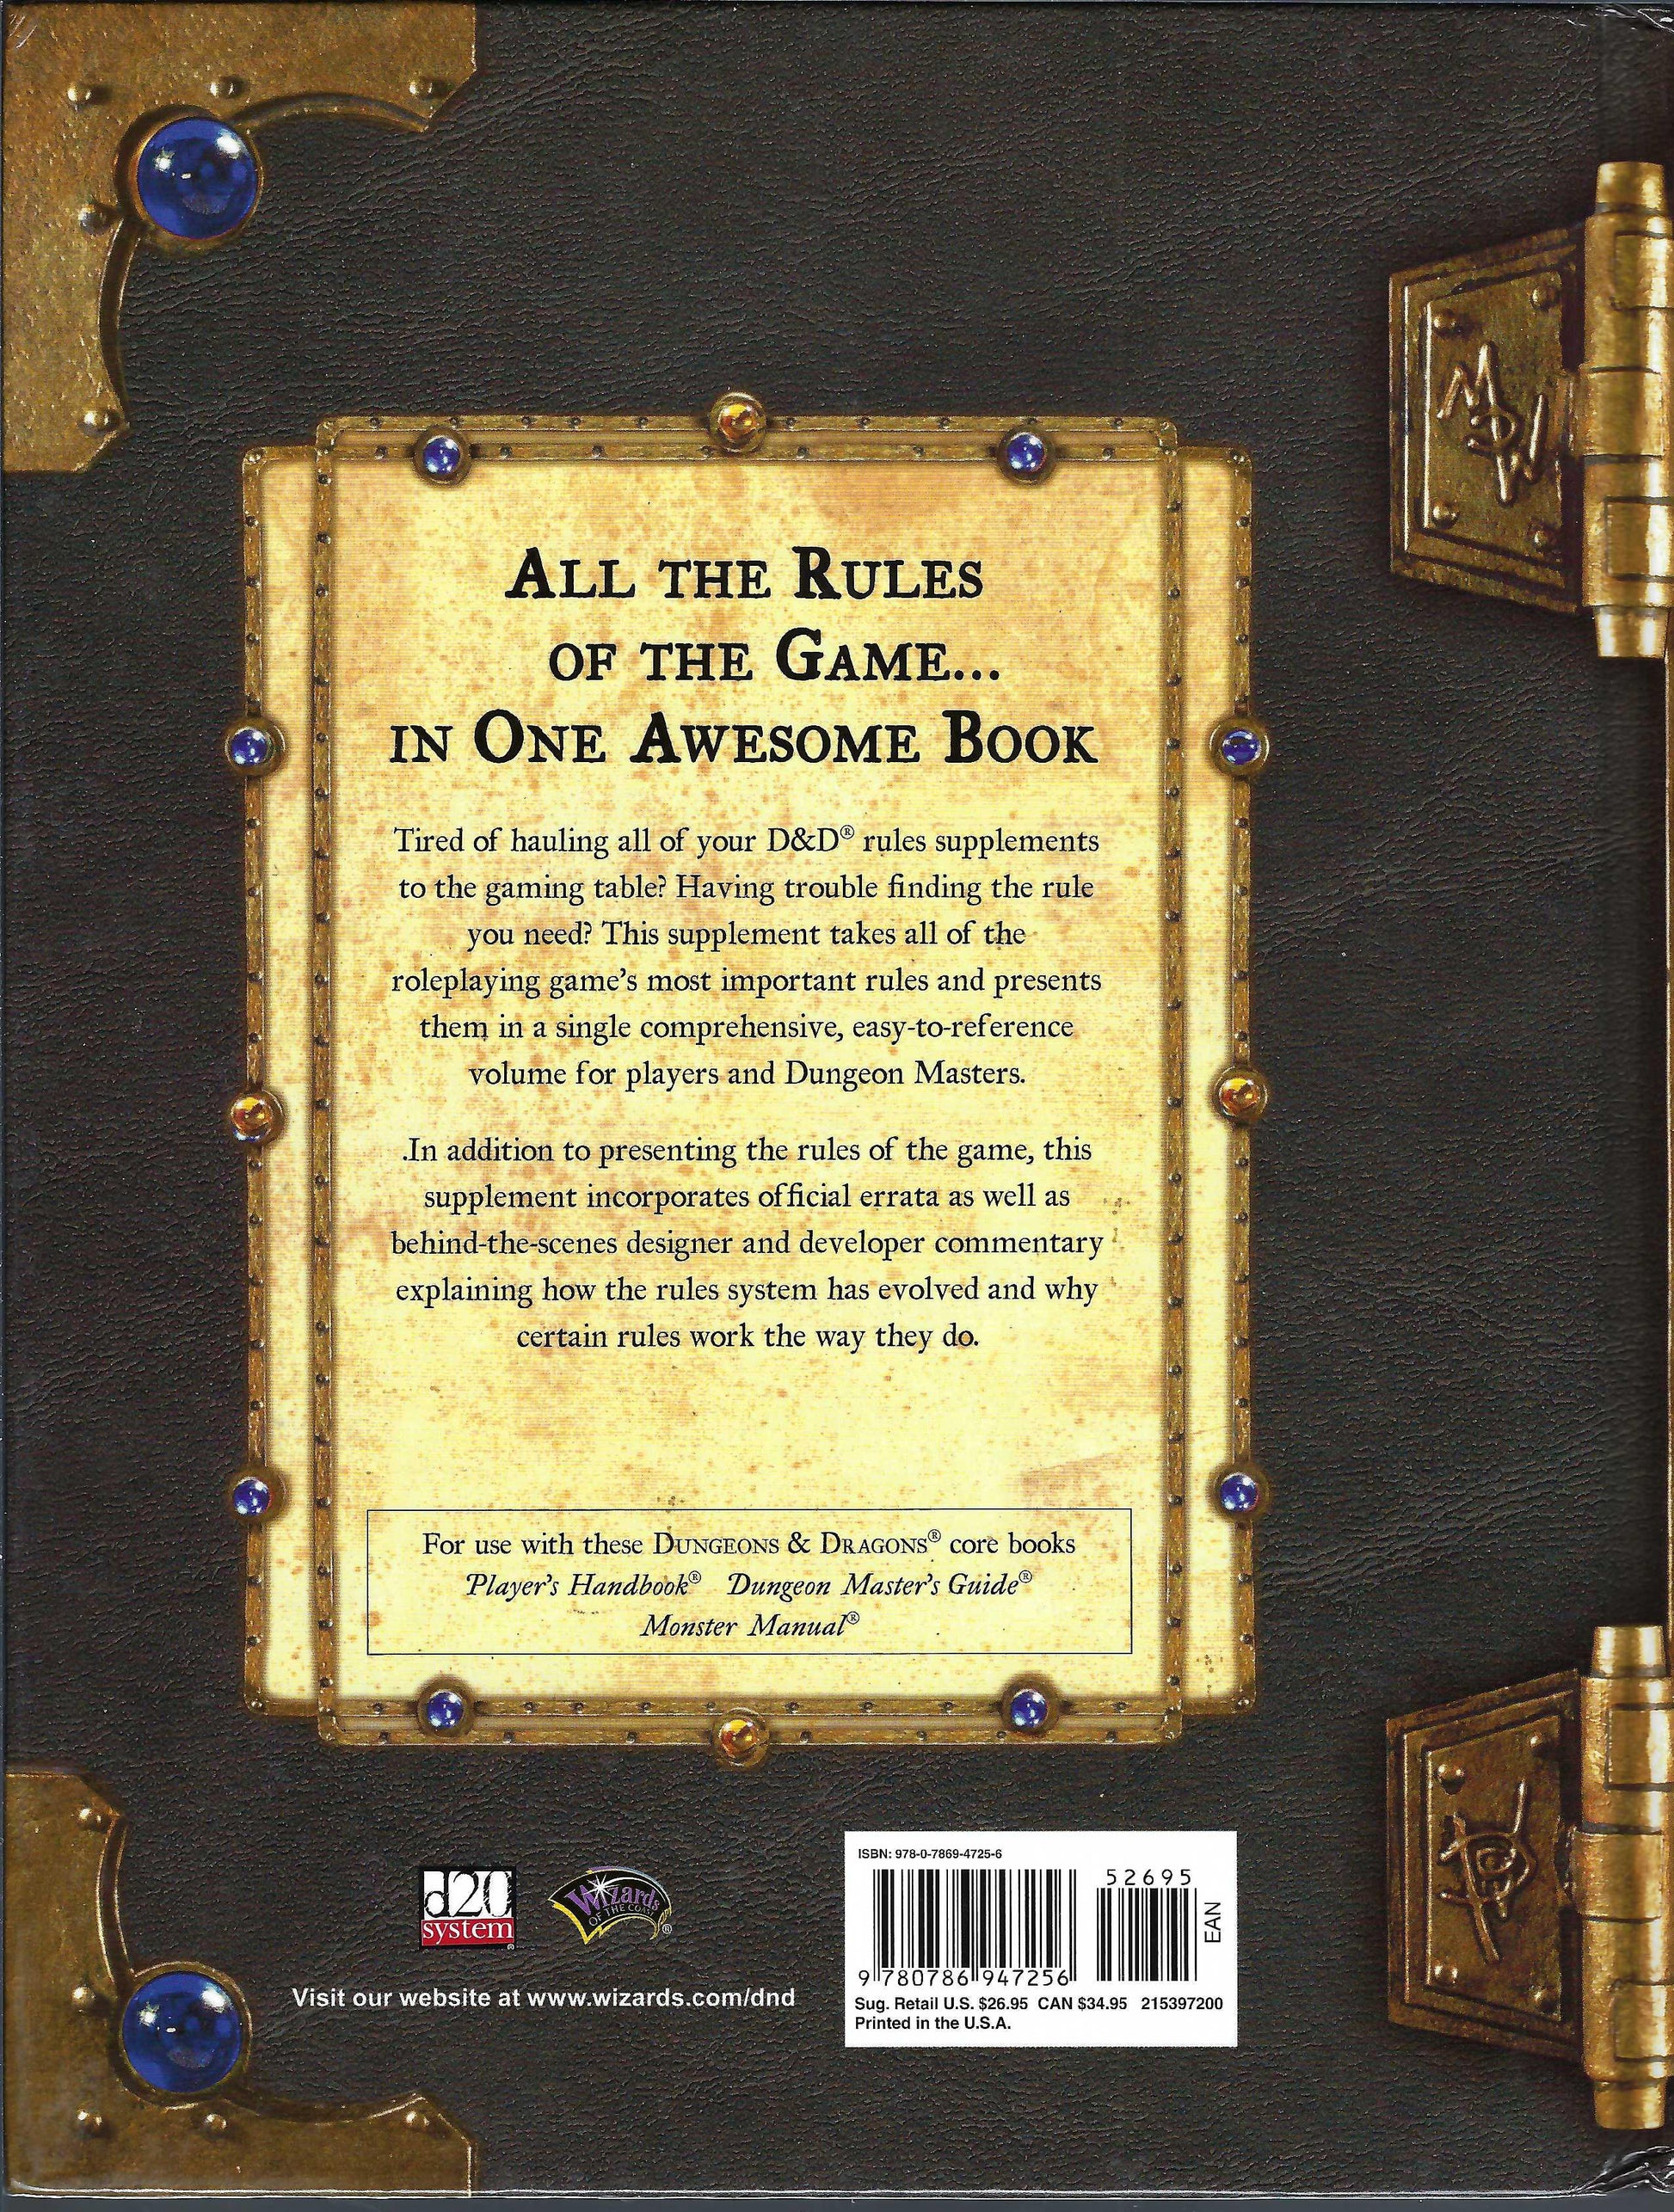 Rules Compendium back cover